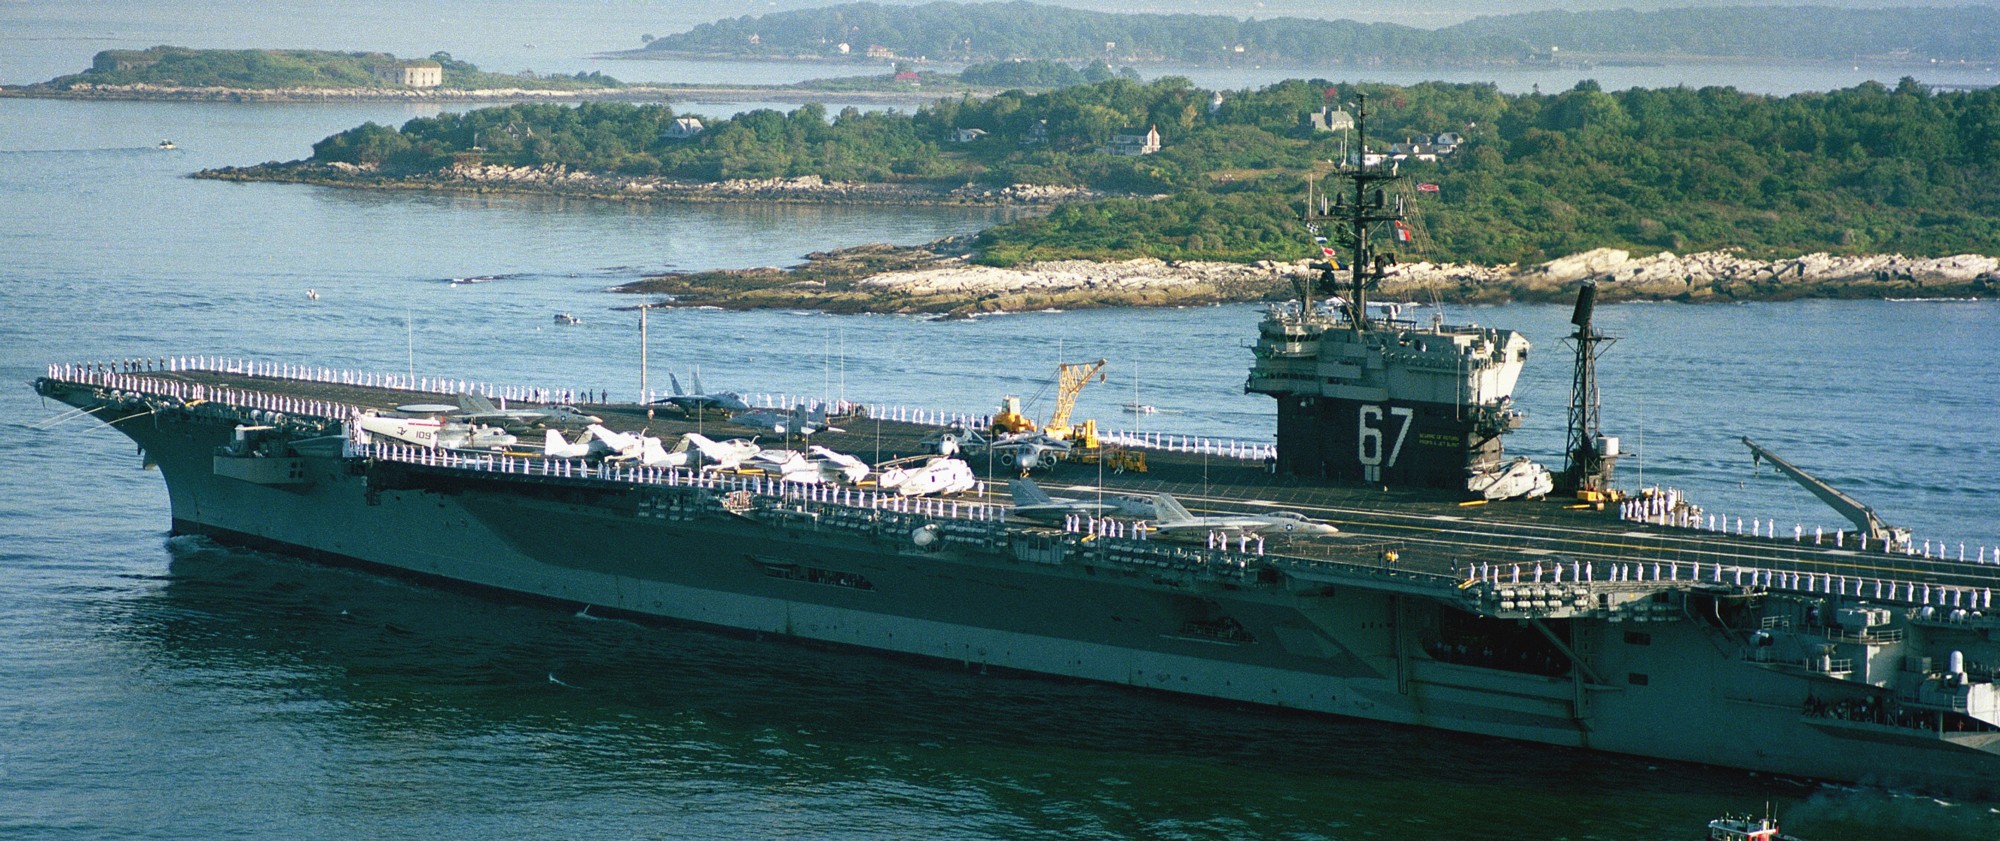 cv-67 uss john f. kennedy aircraft carrier us navy portland maine 1987 110